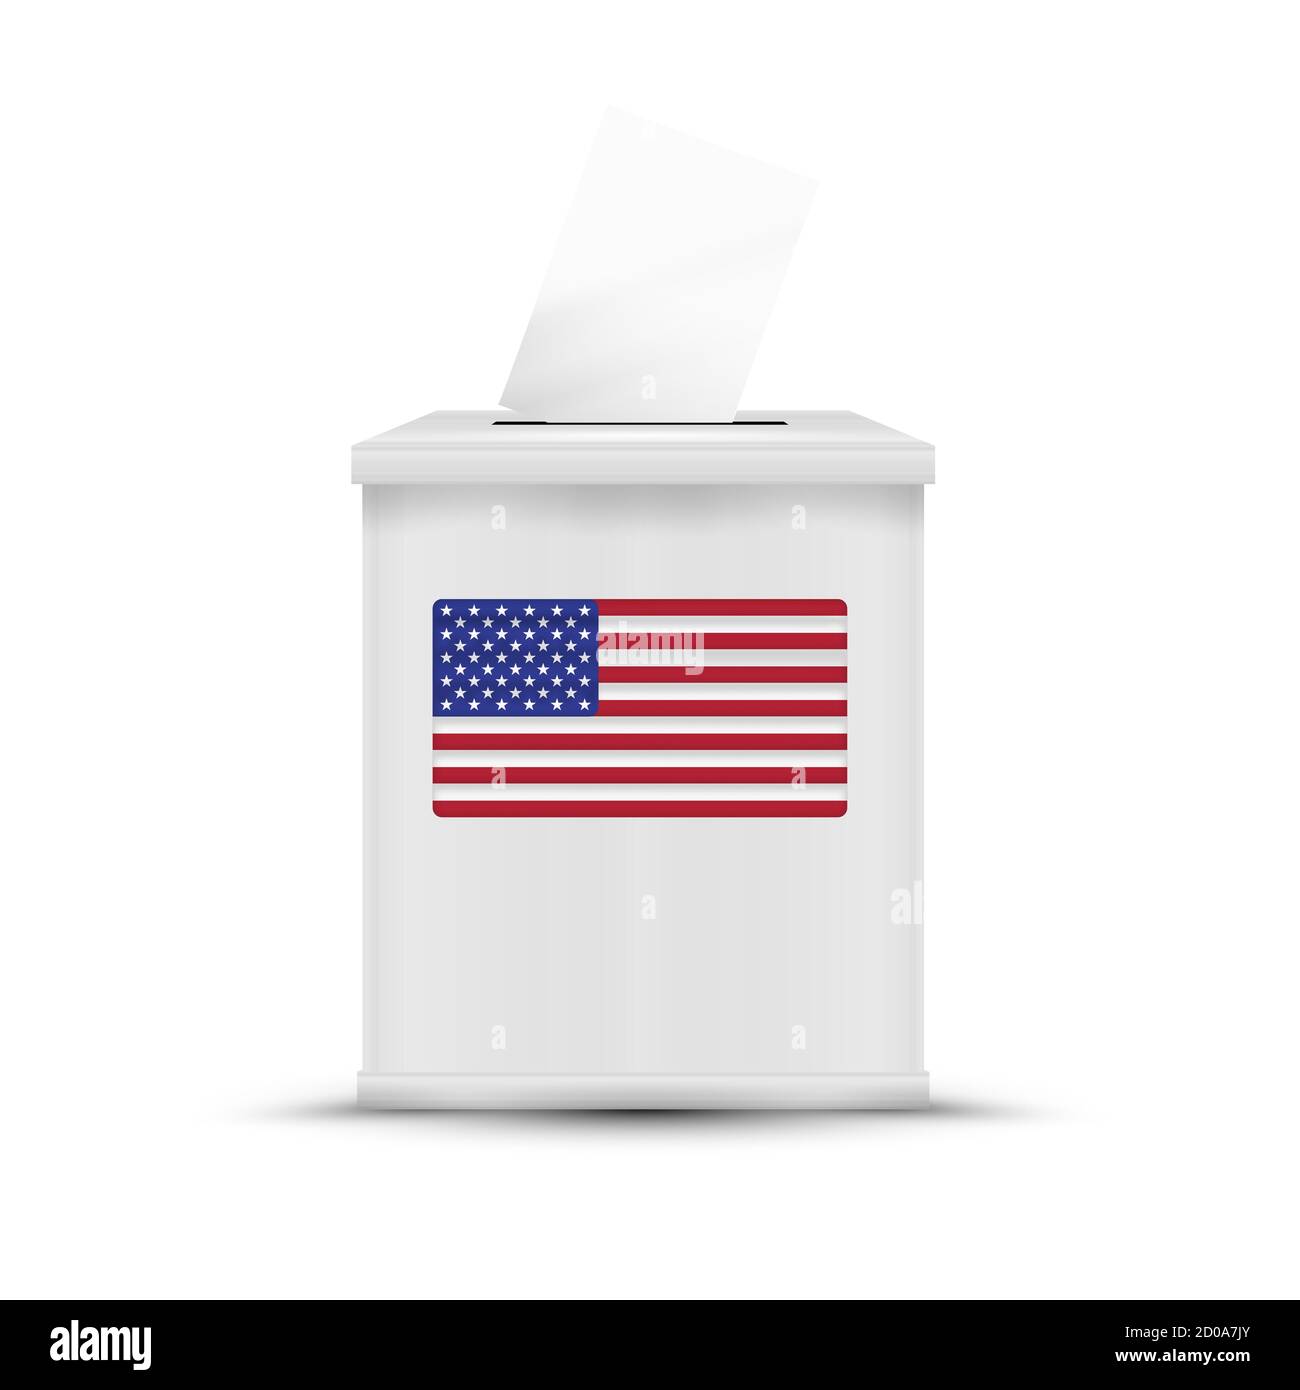 White ballot box isolated. American flag. 2020 United States presidential election. illustration. Stock Photo